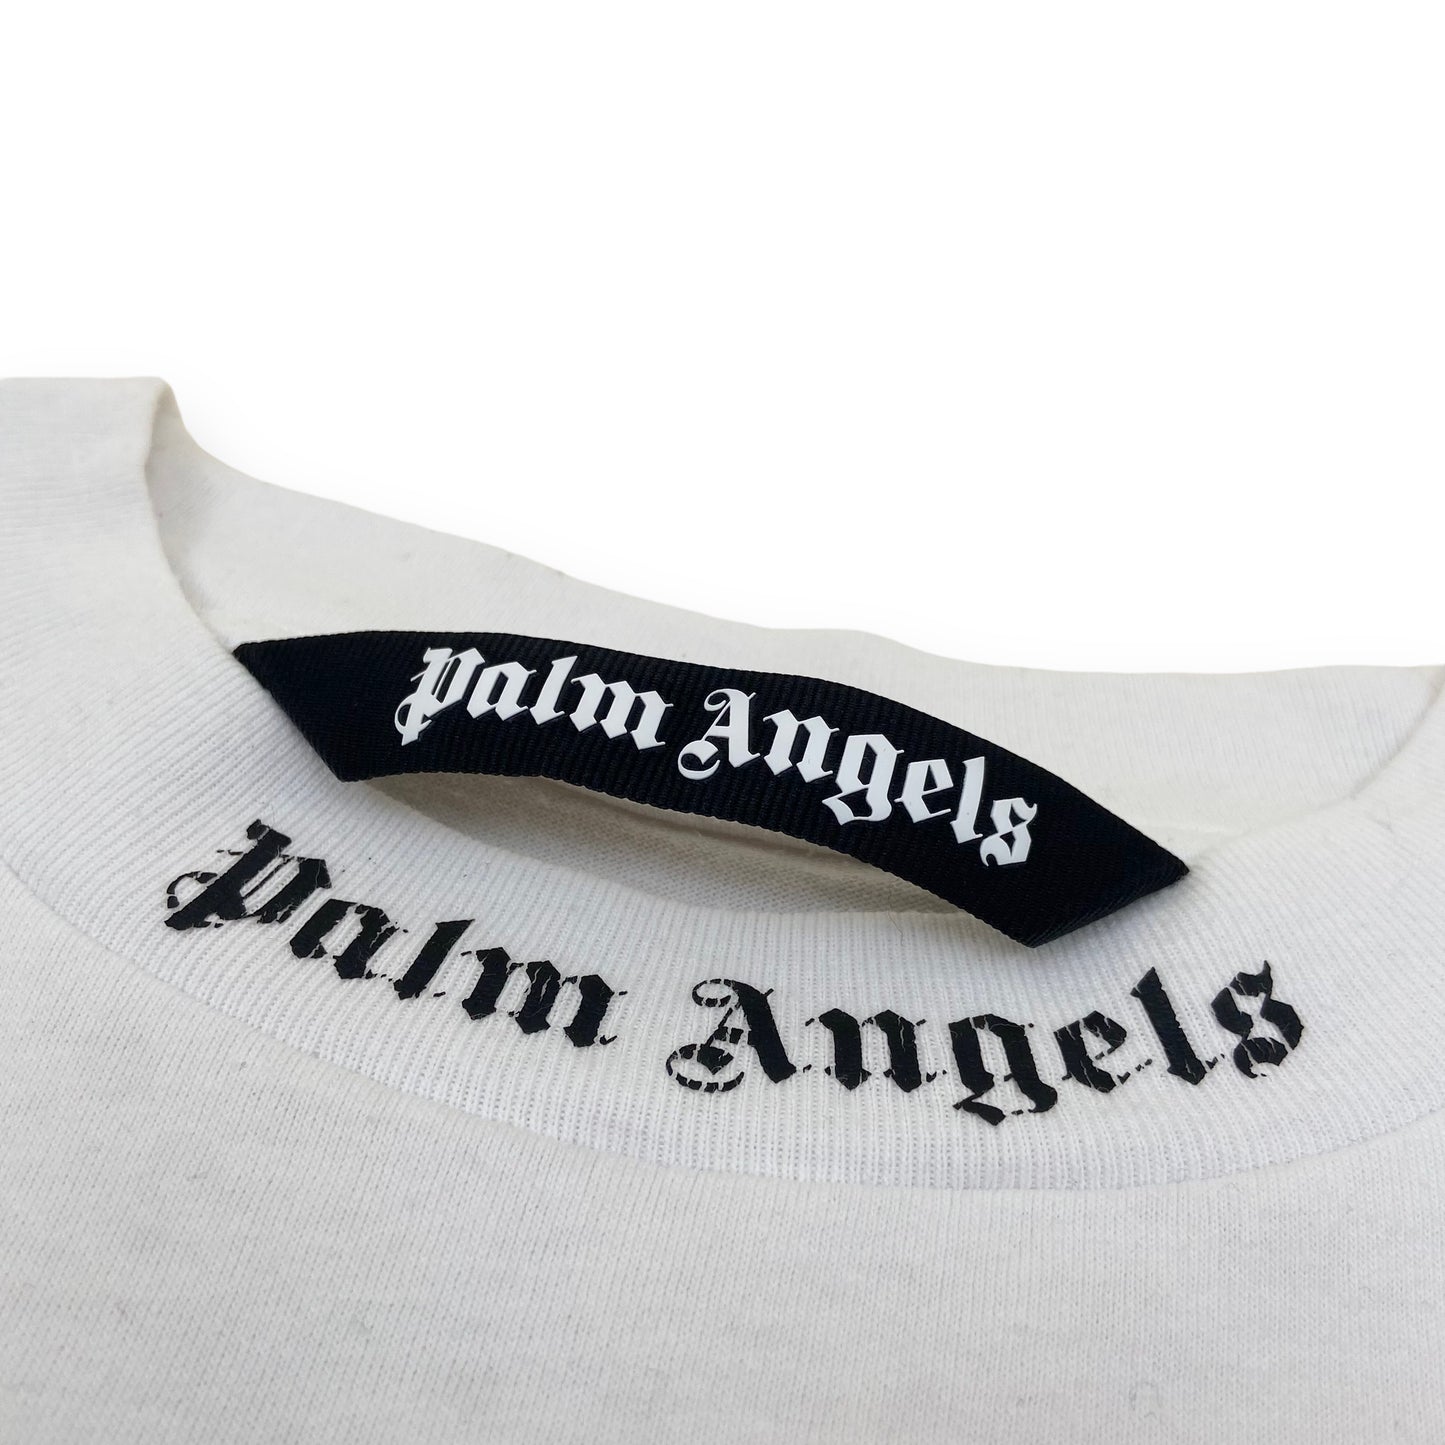 PALM ANGELS T-SHIRT WHITE M